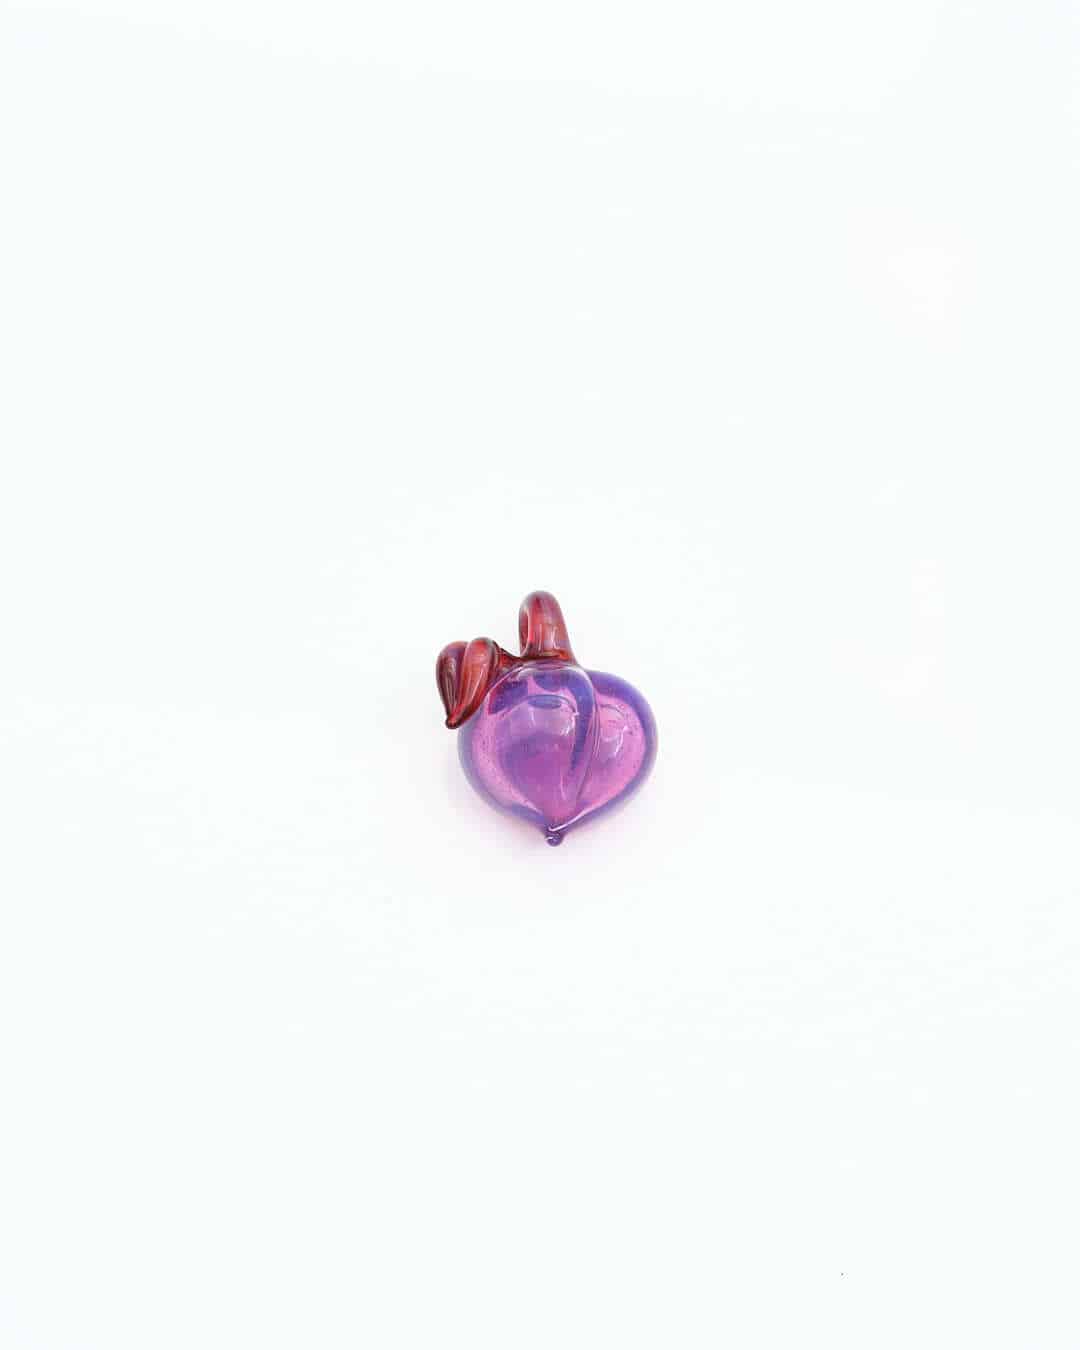 innovative glass pendant - (25C) Purple Peach w/ Red Stem Pendant by Gnarla Carla